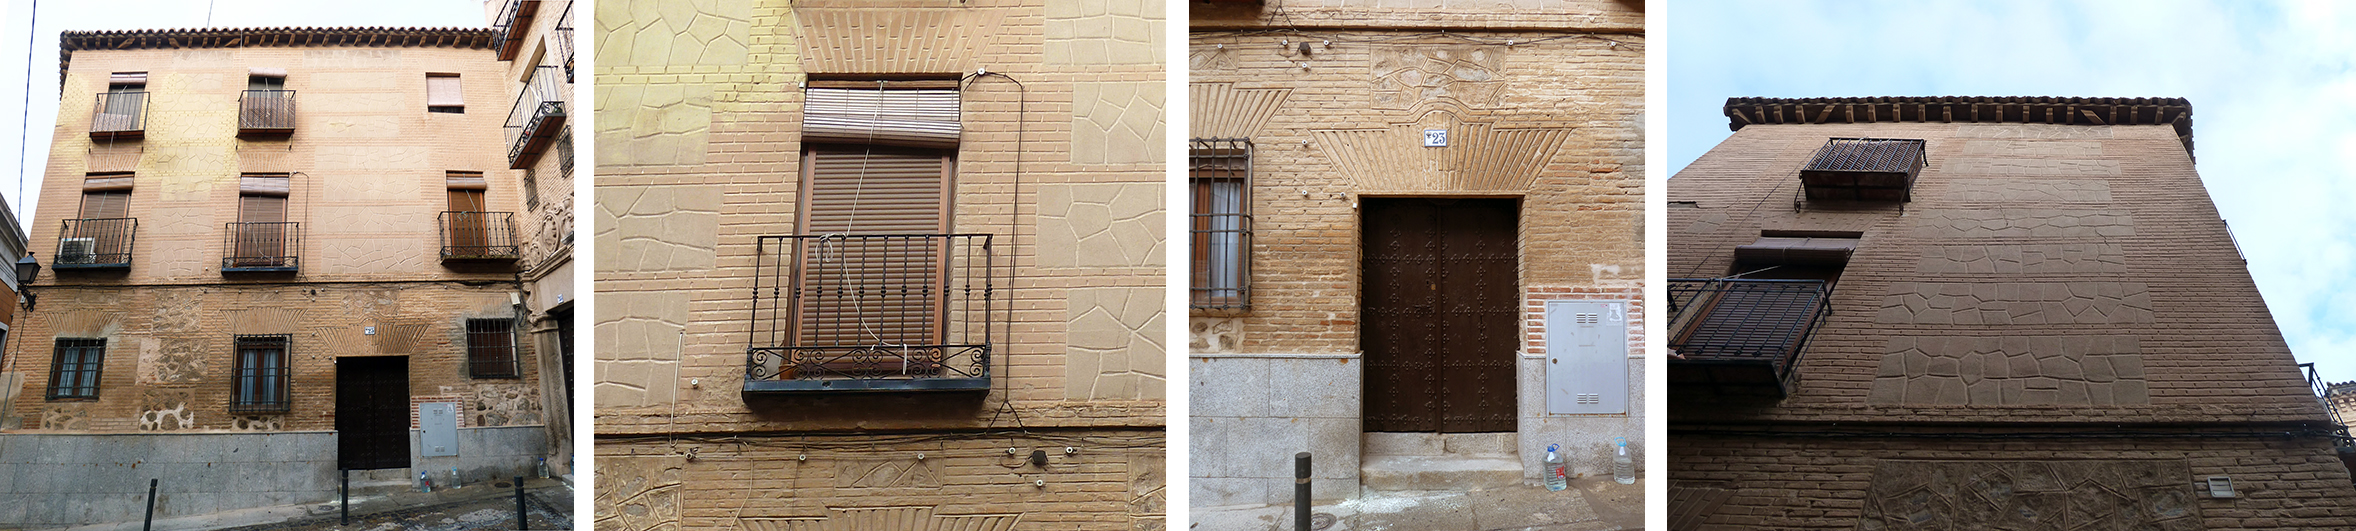 Punta paleta. Composición fachada Instituto 23, Toledo